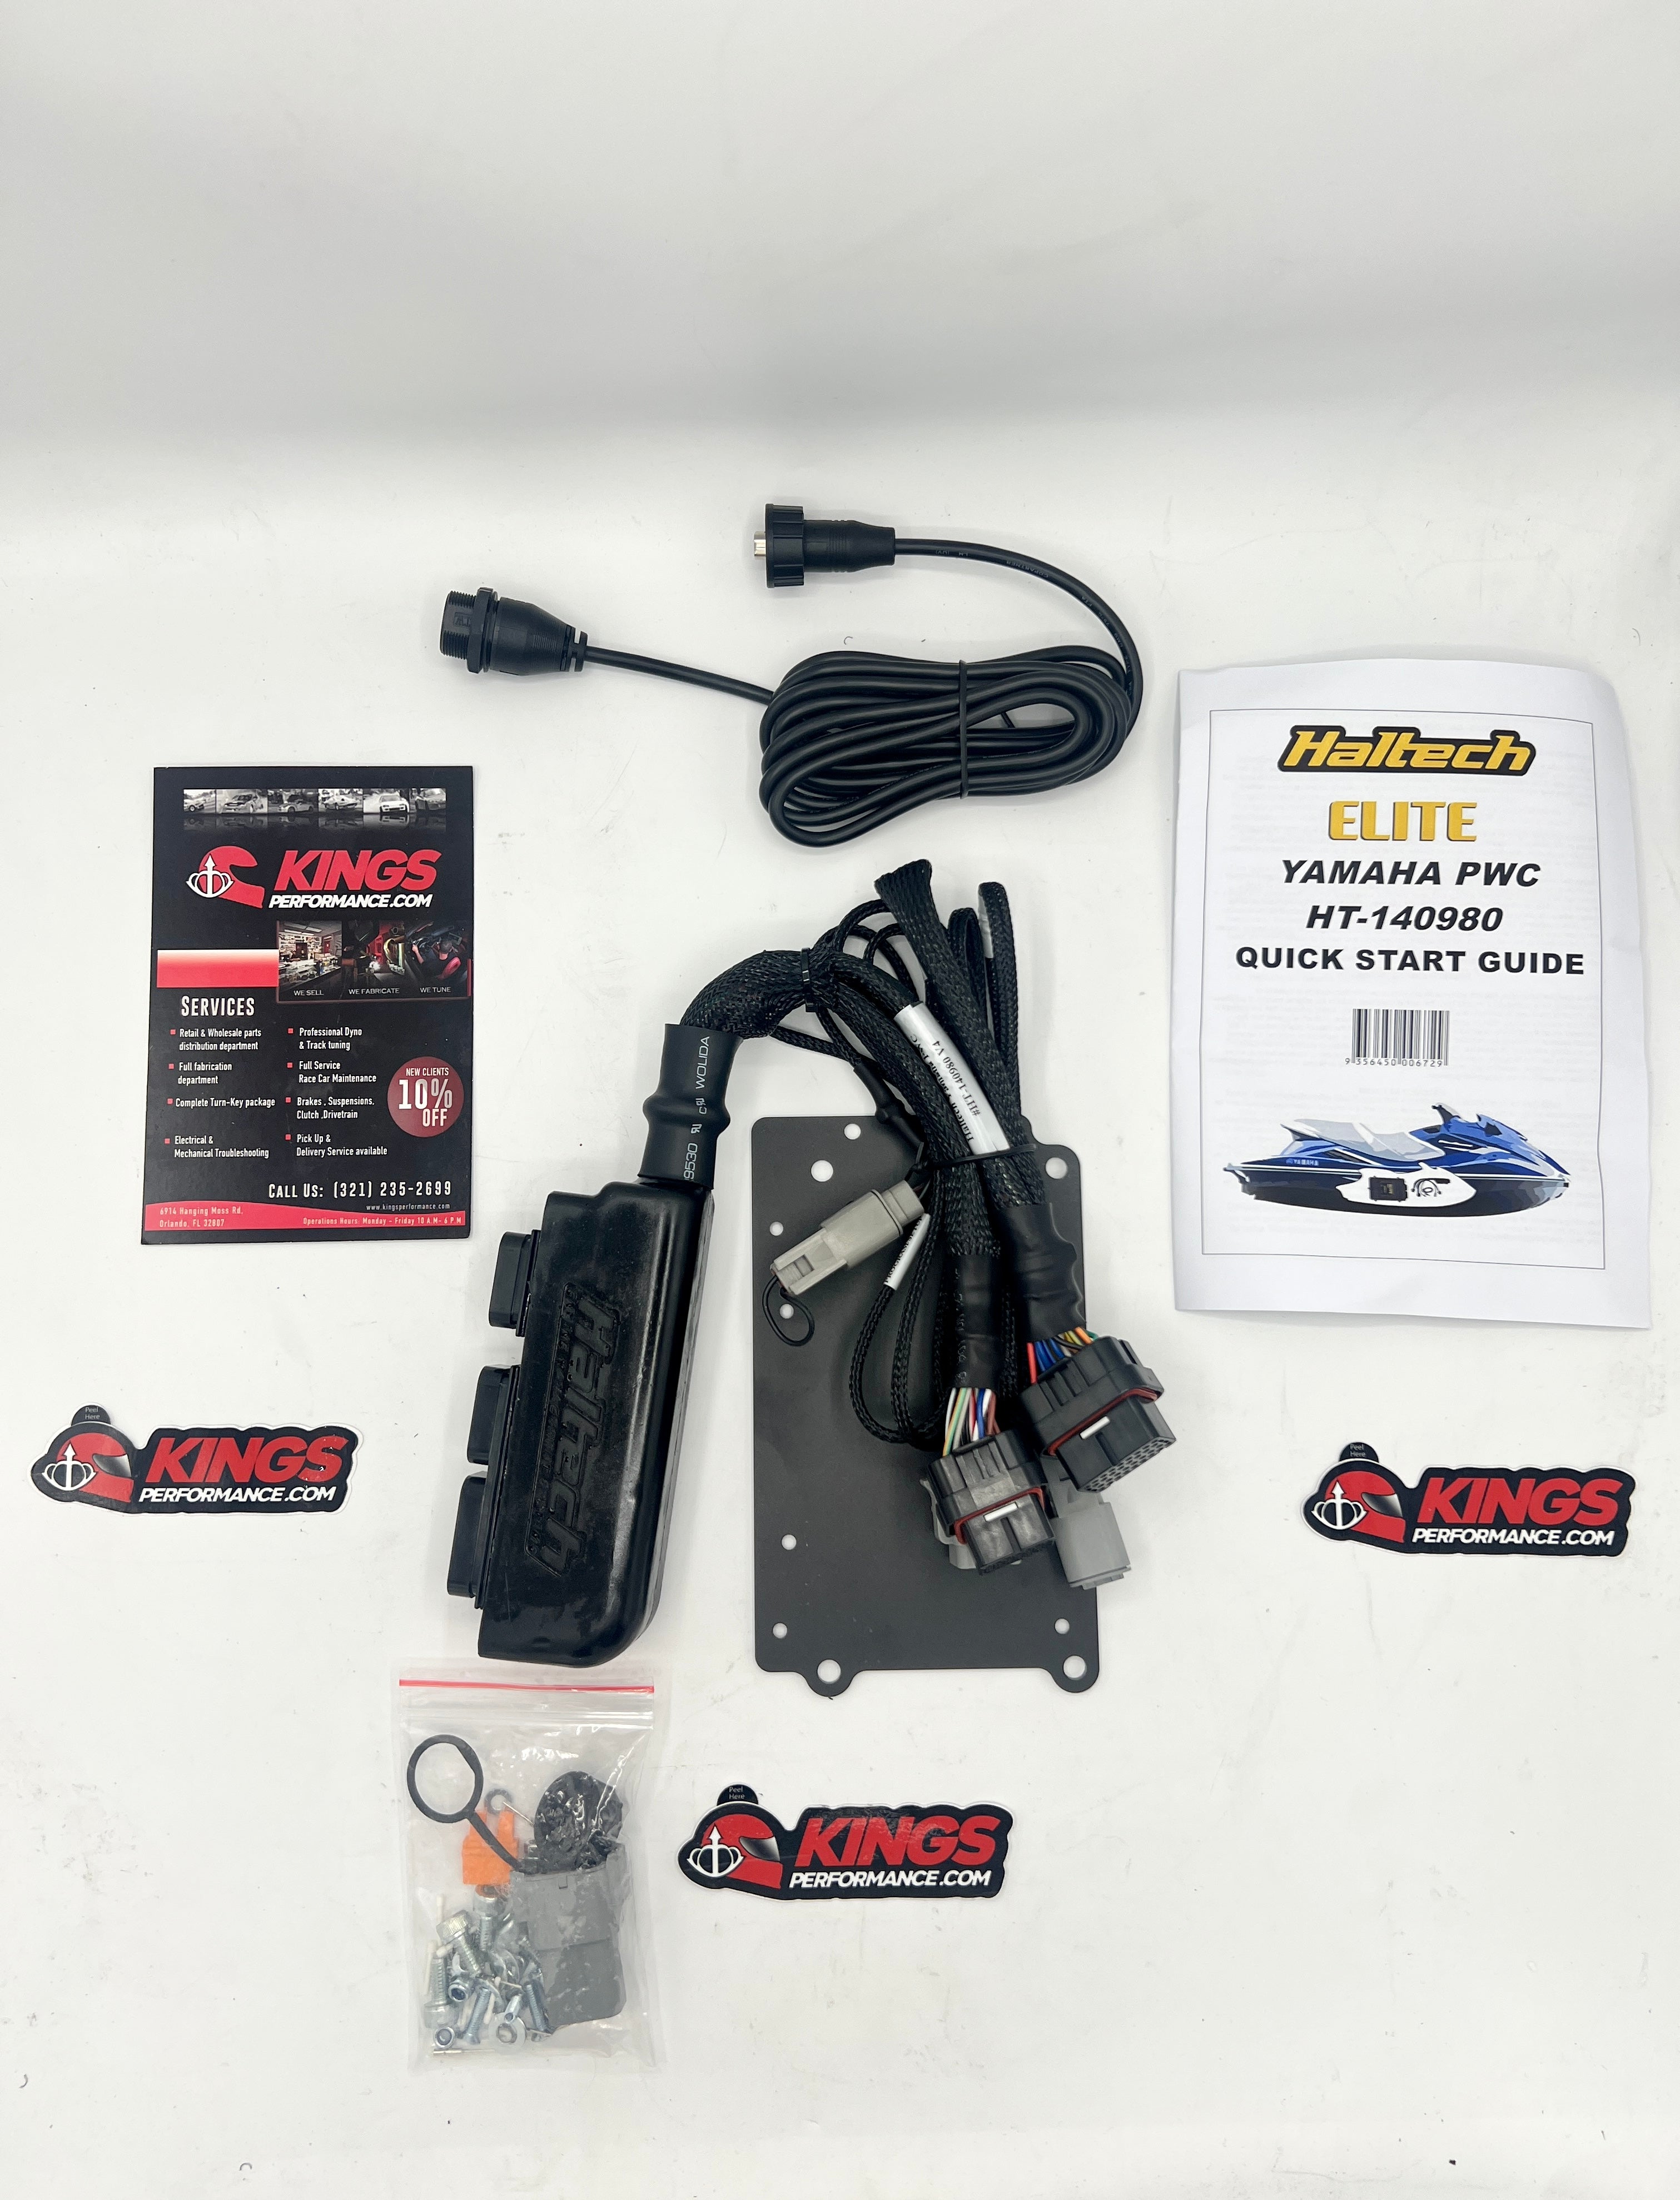 Haltech Elite 1500 + Yamaha WaveRunner FX, FZS, FZR Plug 'n' Play Adaptor Harness Kit (HT-150980)